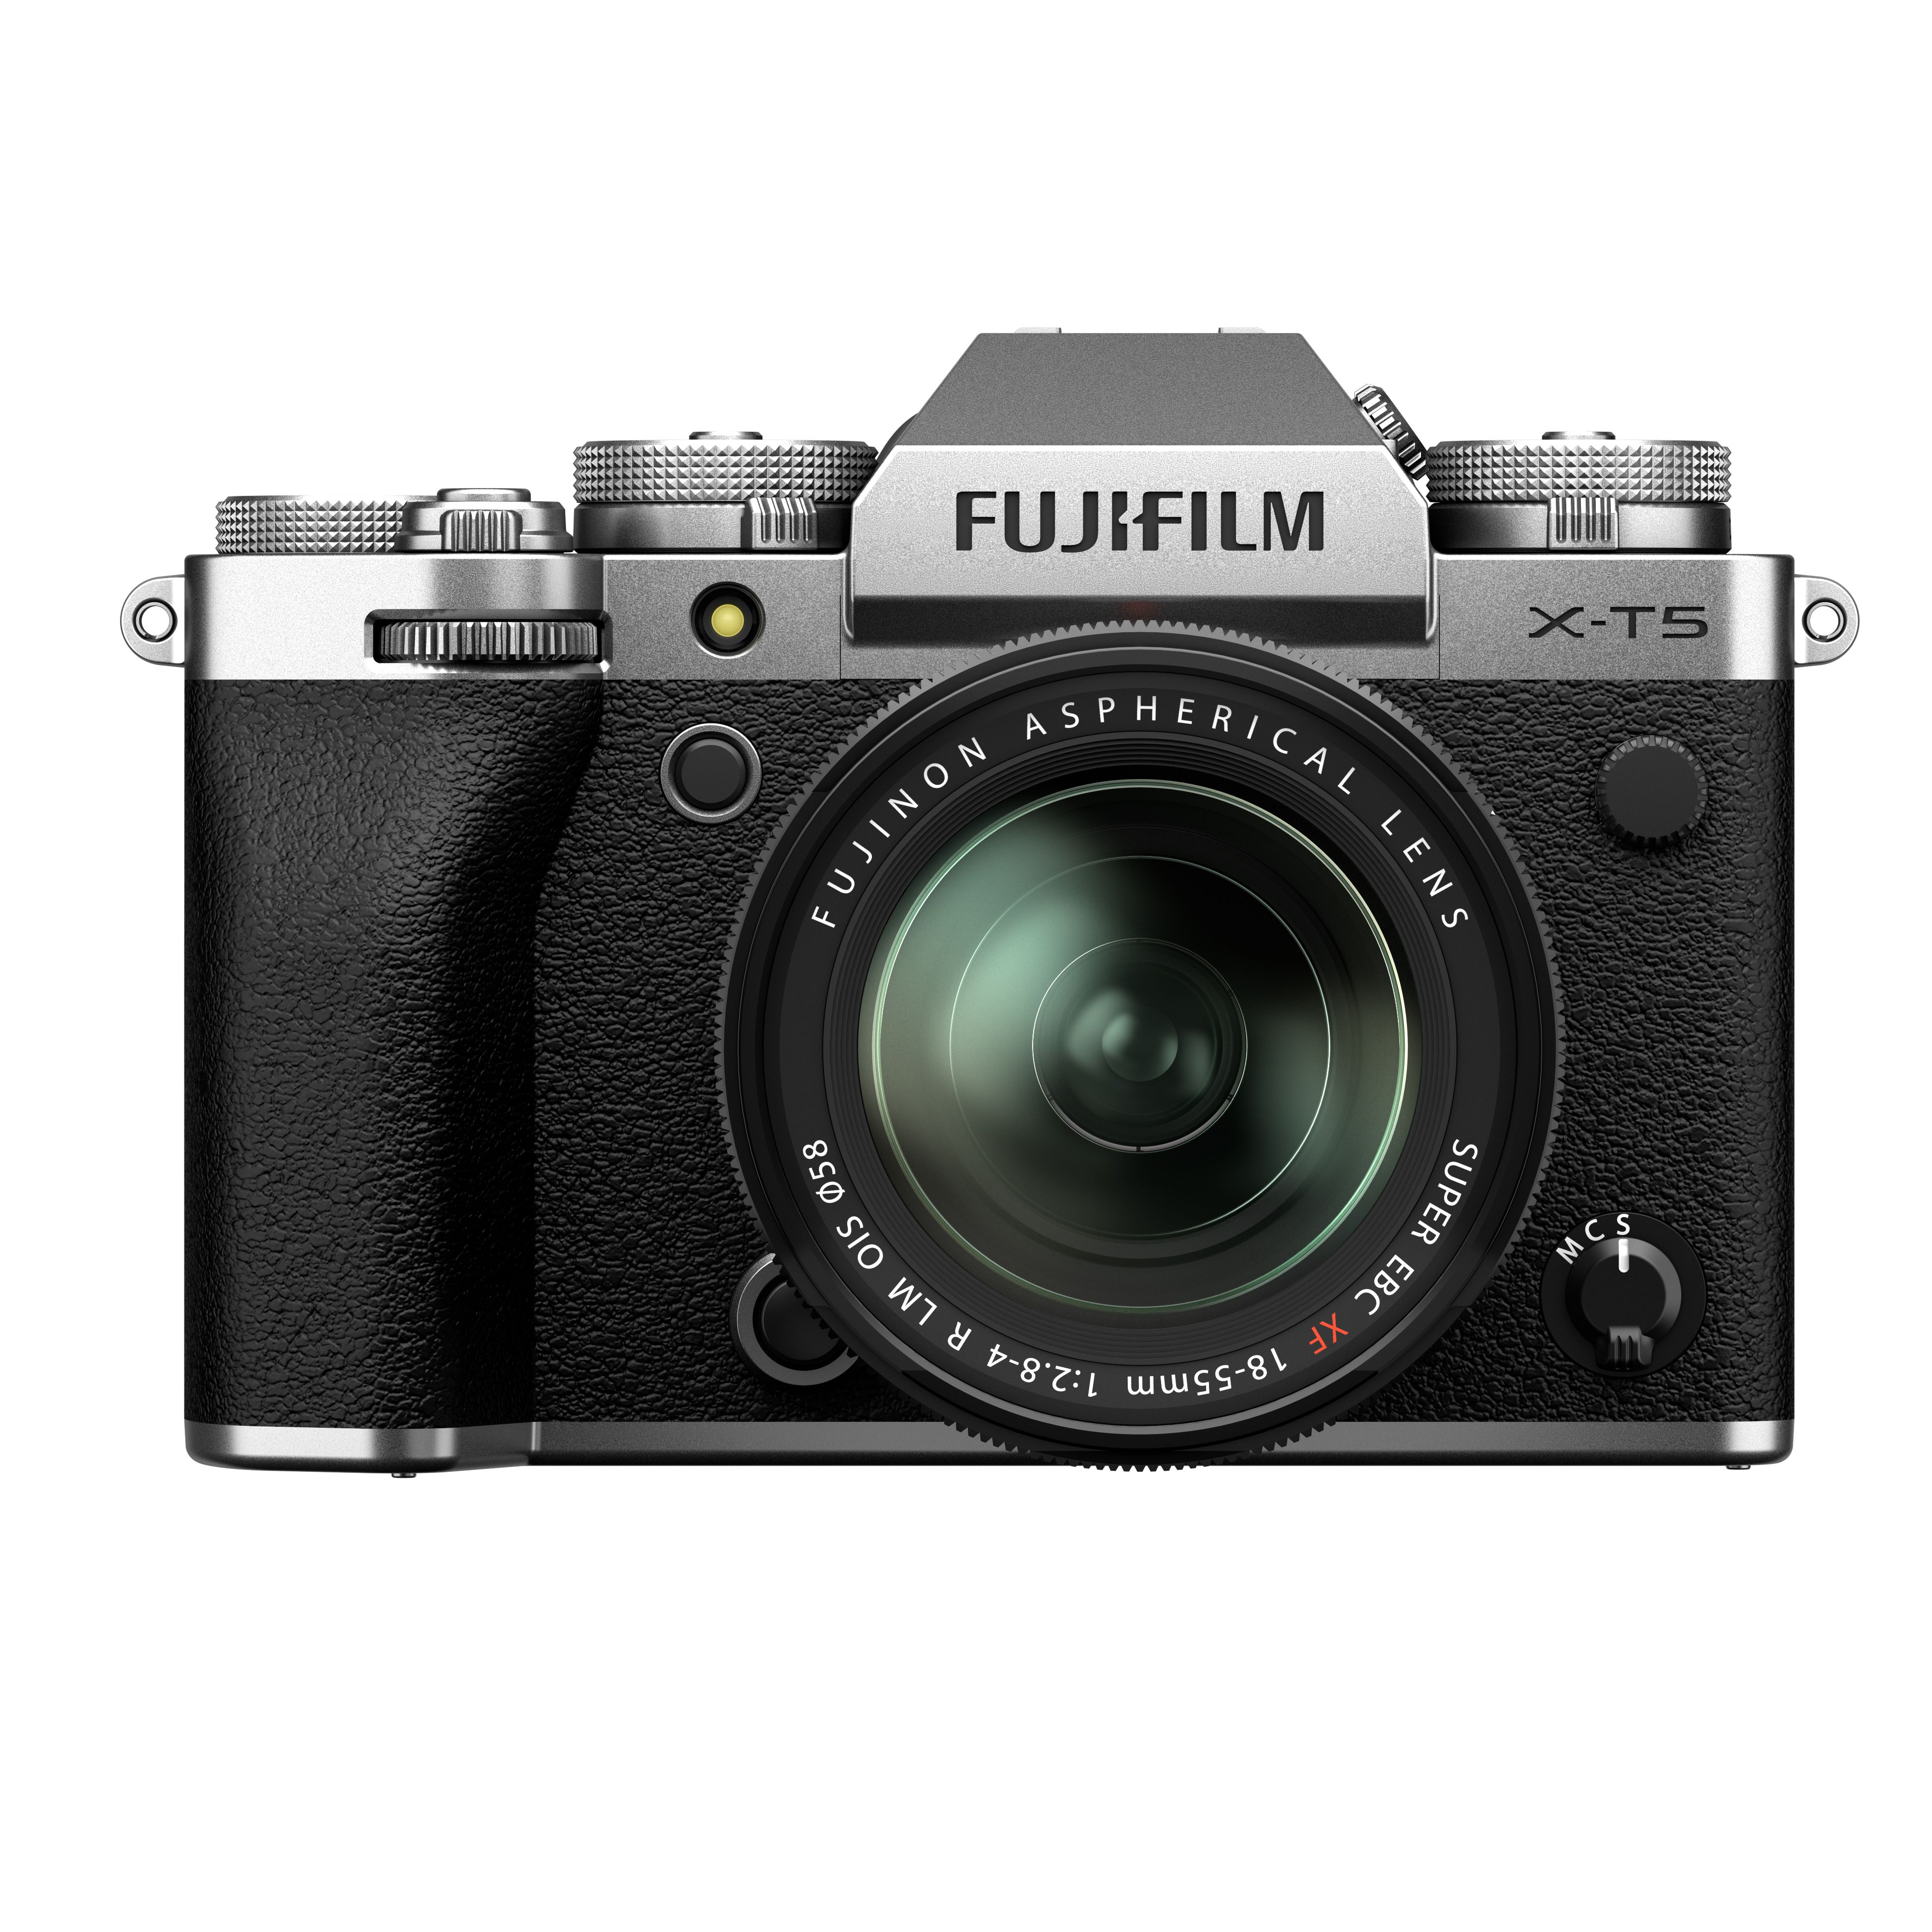 Fujifilm X-T5 Mirrorless Camera (Silver) with XF 18-55mm F2.8-4 Lens